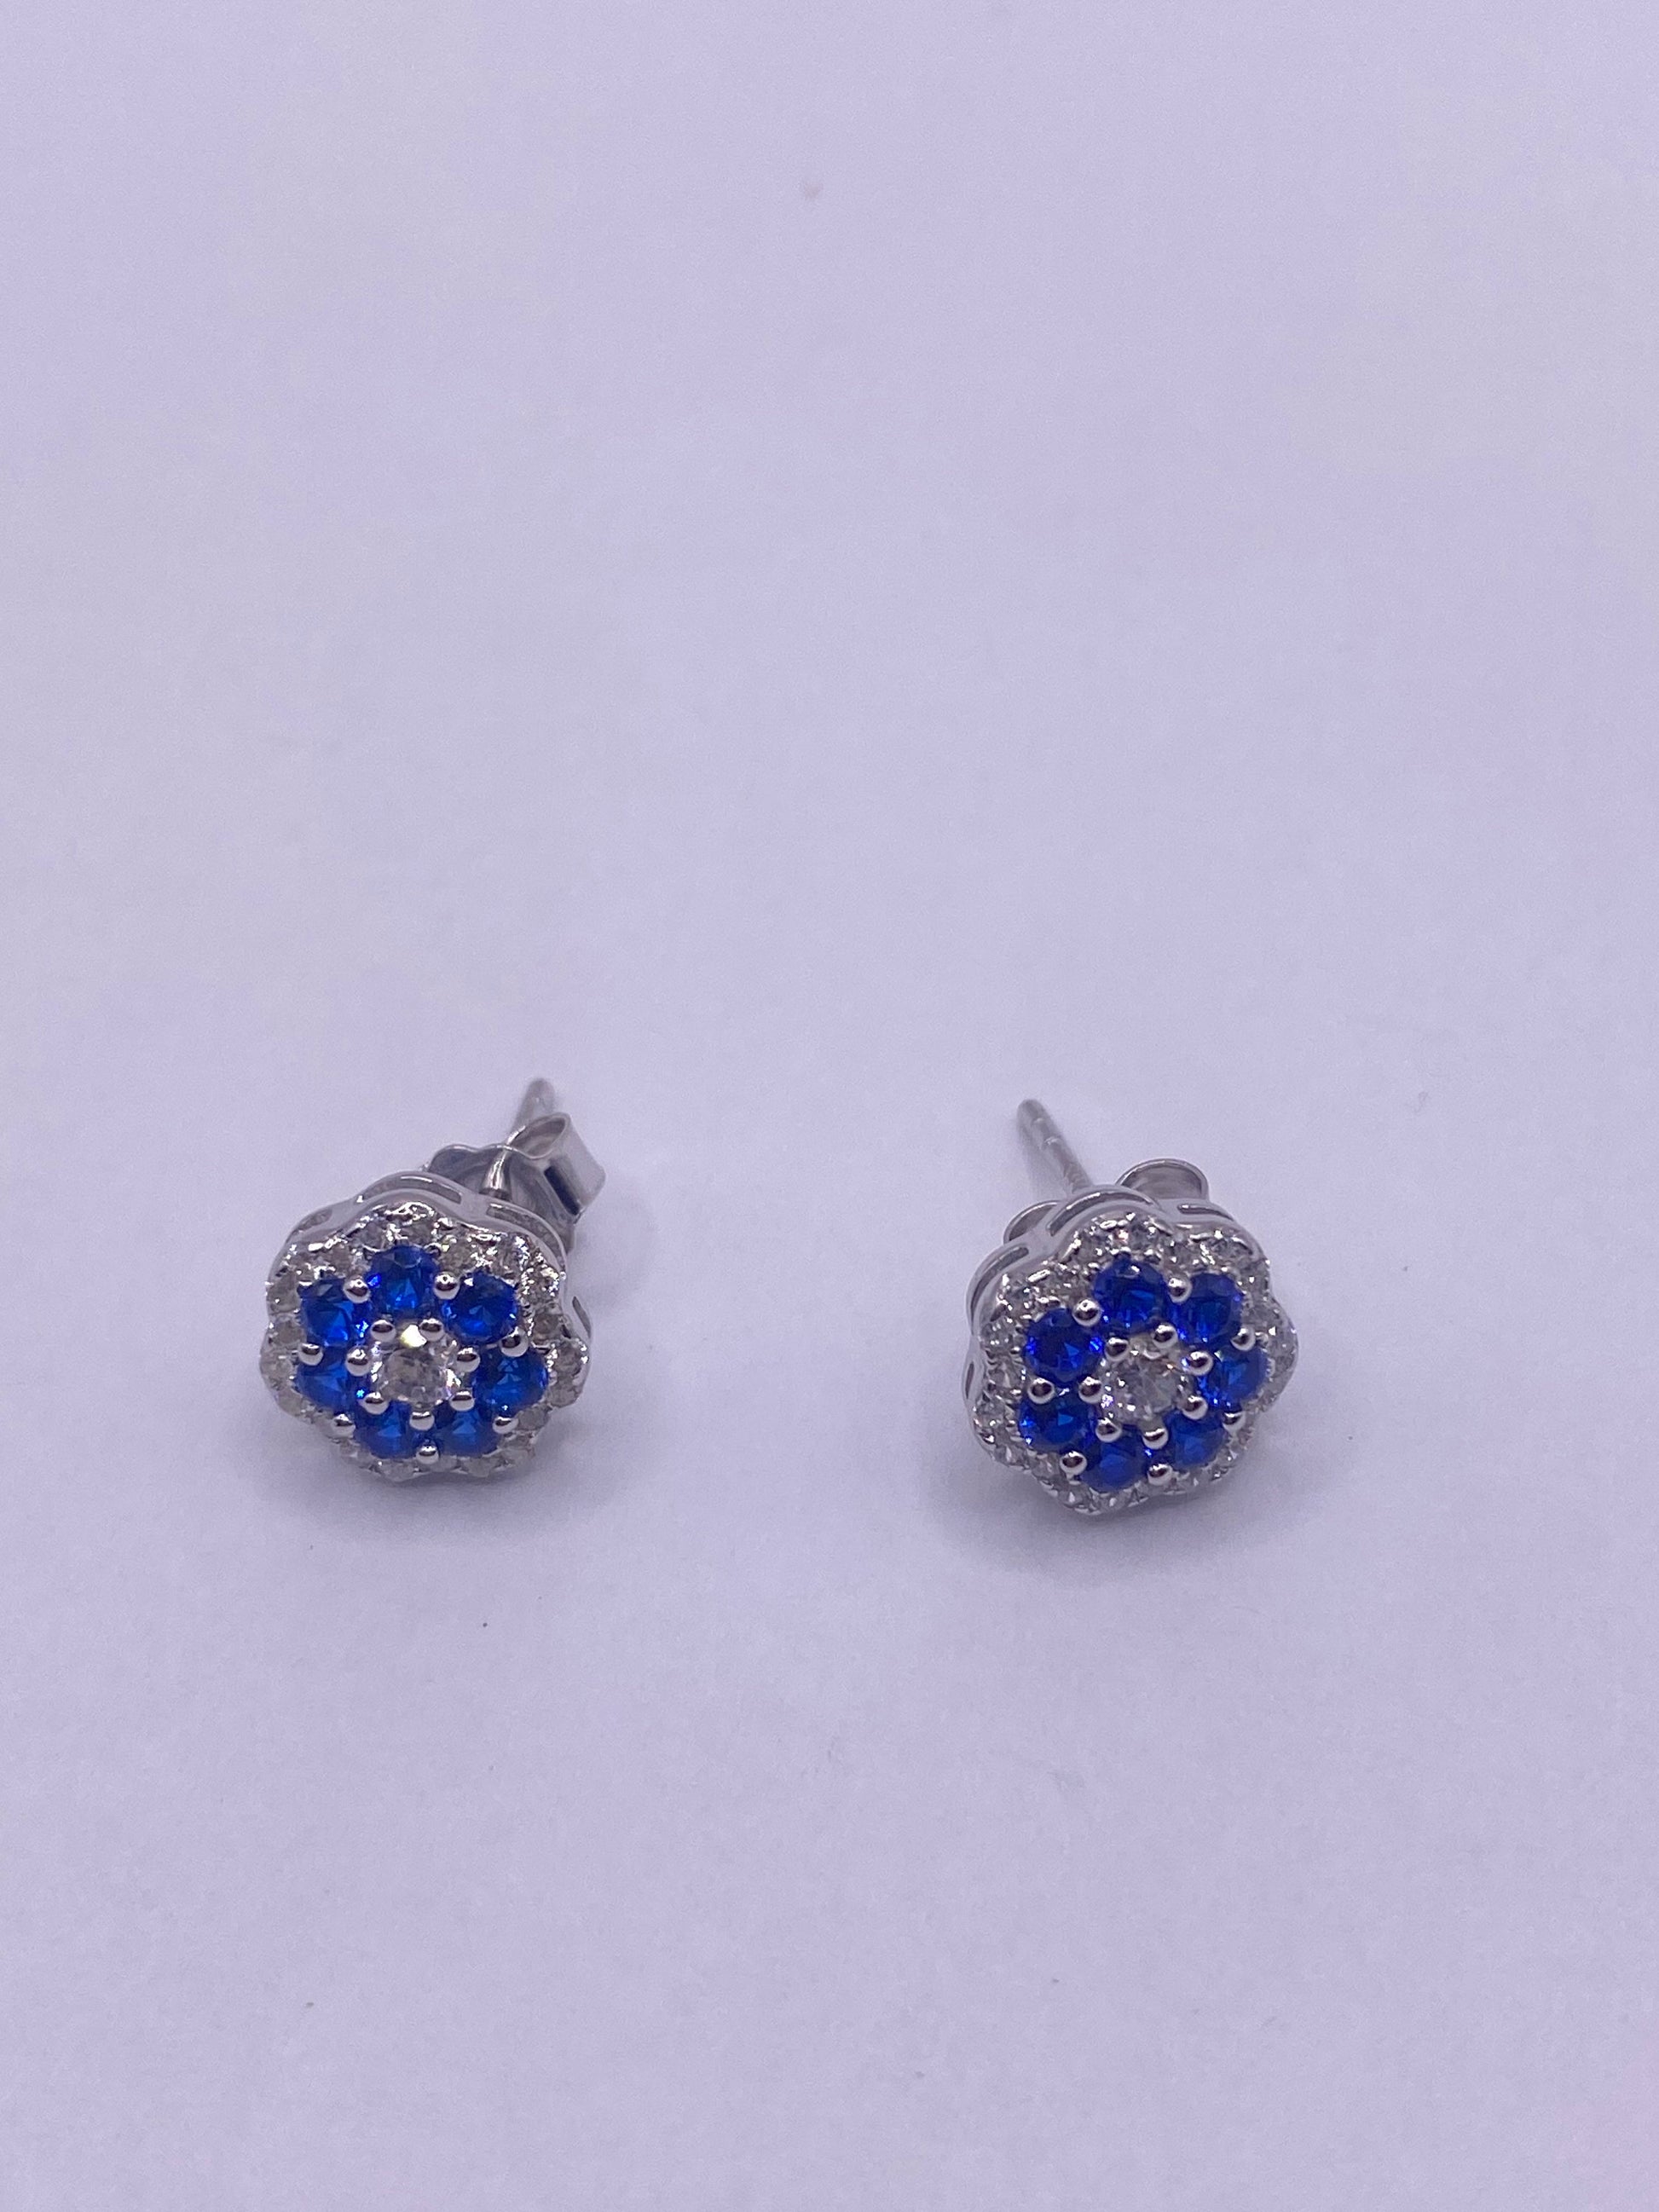 Vintage Blue Iolite Earrings 925 Sterling Silver Stud Button